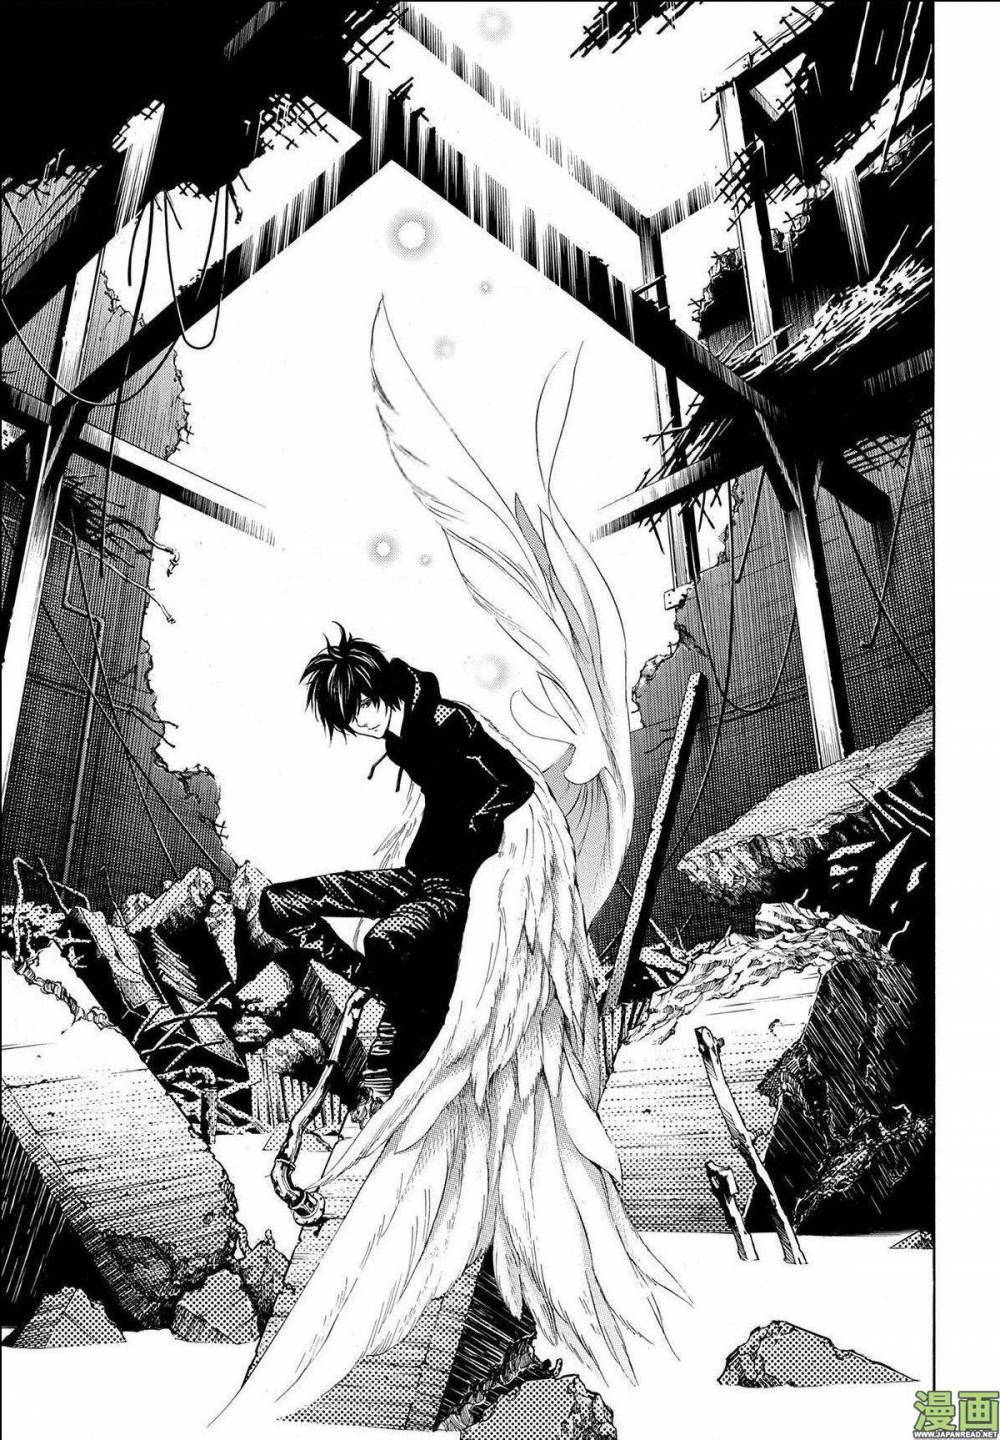 Platinum End - Exciting Japanese Manga Art Wallpaper